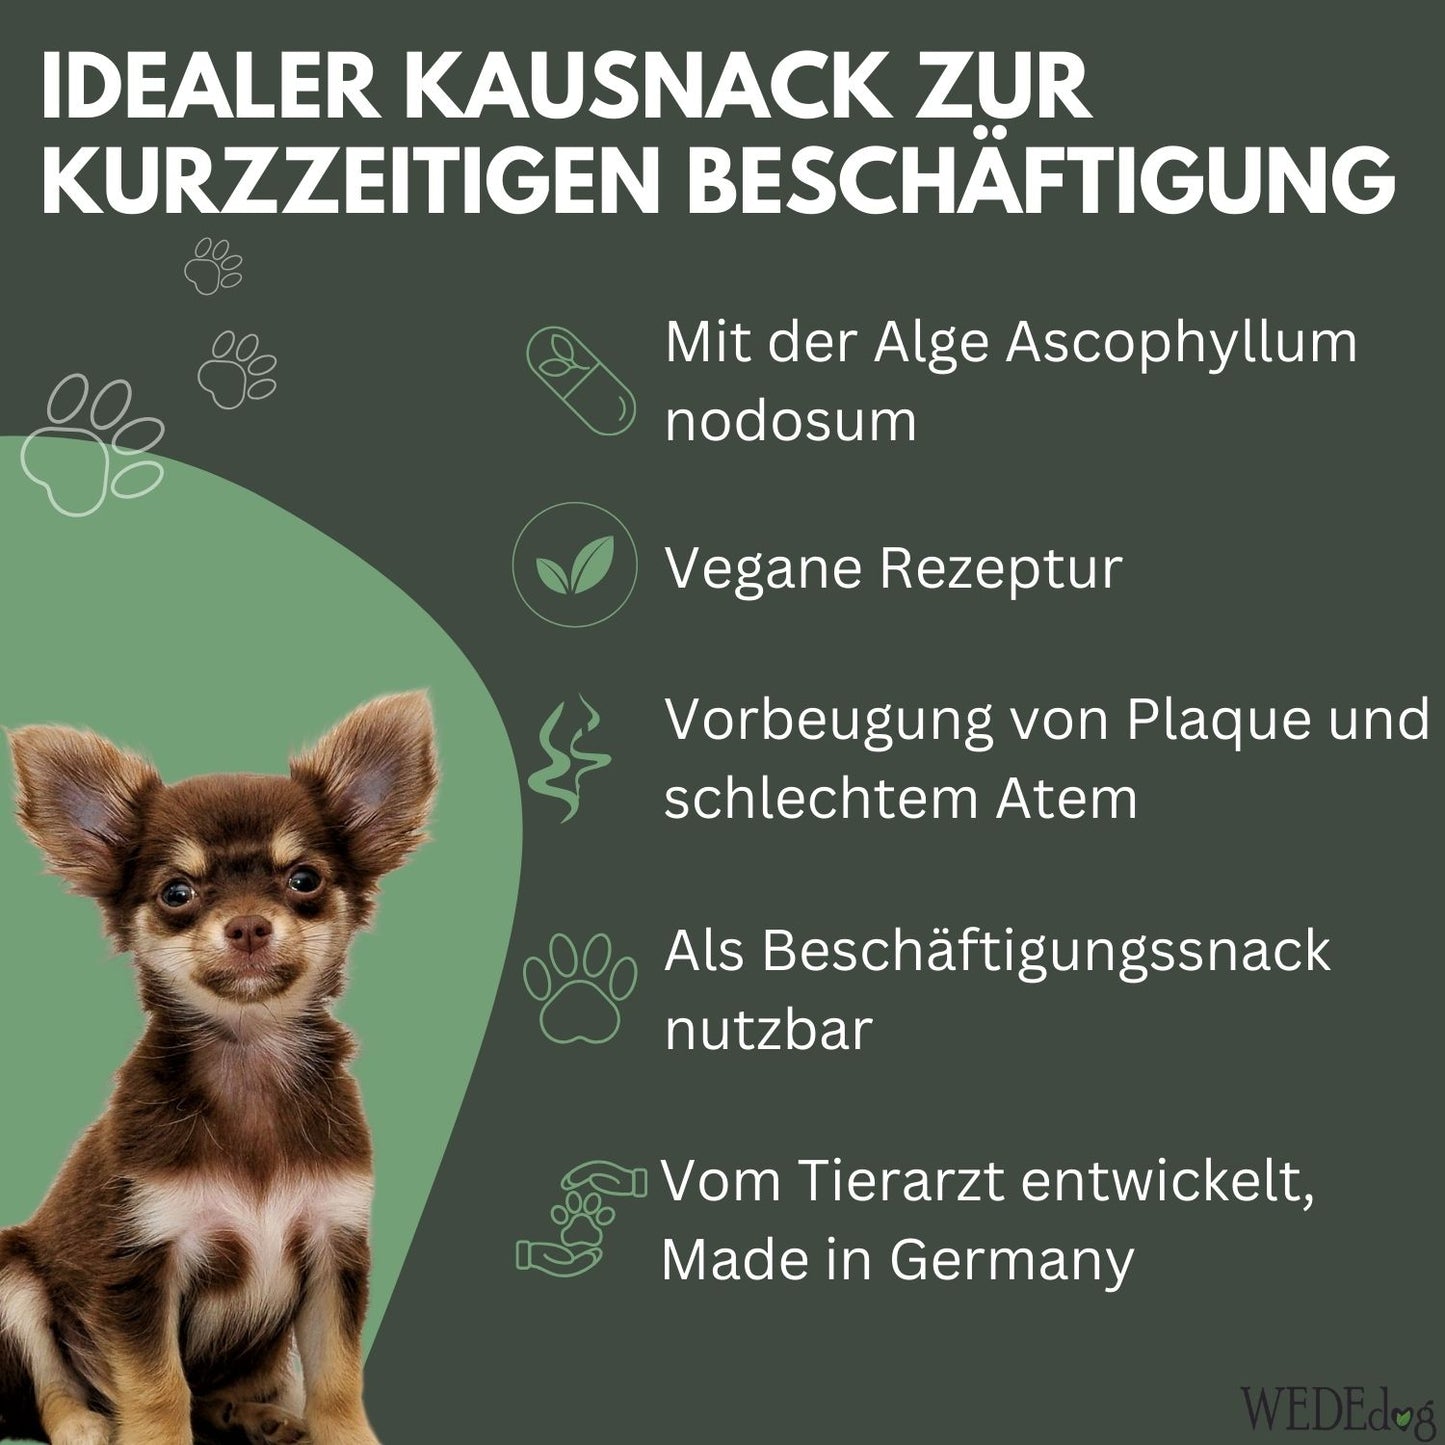 Natürliche Kausnacks für Hunde I Zahngesundheit Hund I WEDEdog DENTAL STICKS I Premium Kausticks für Hunde I 115g